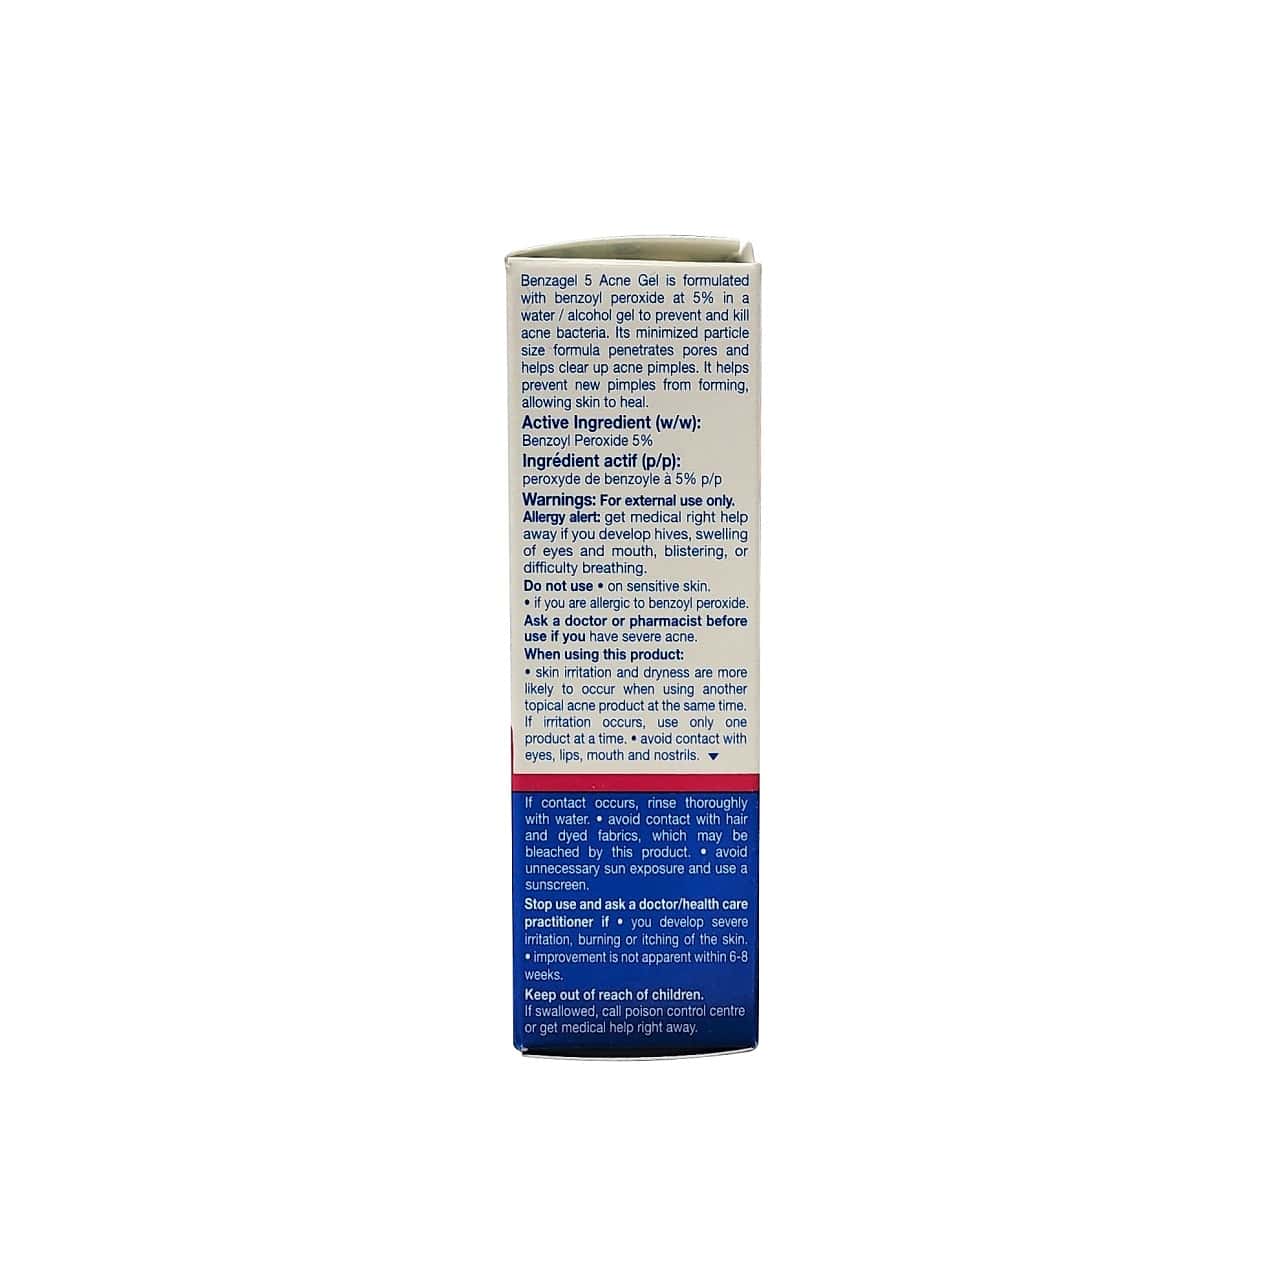 Description, ingredients, warnings for Benzagel 5 Acne Gel (15 grams) in English